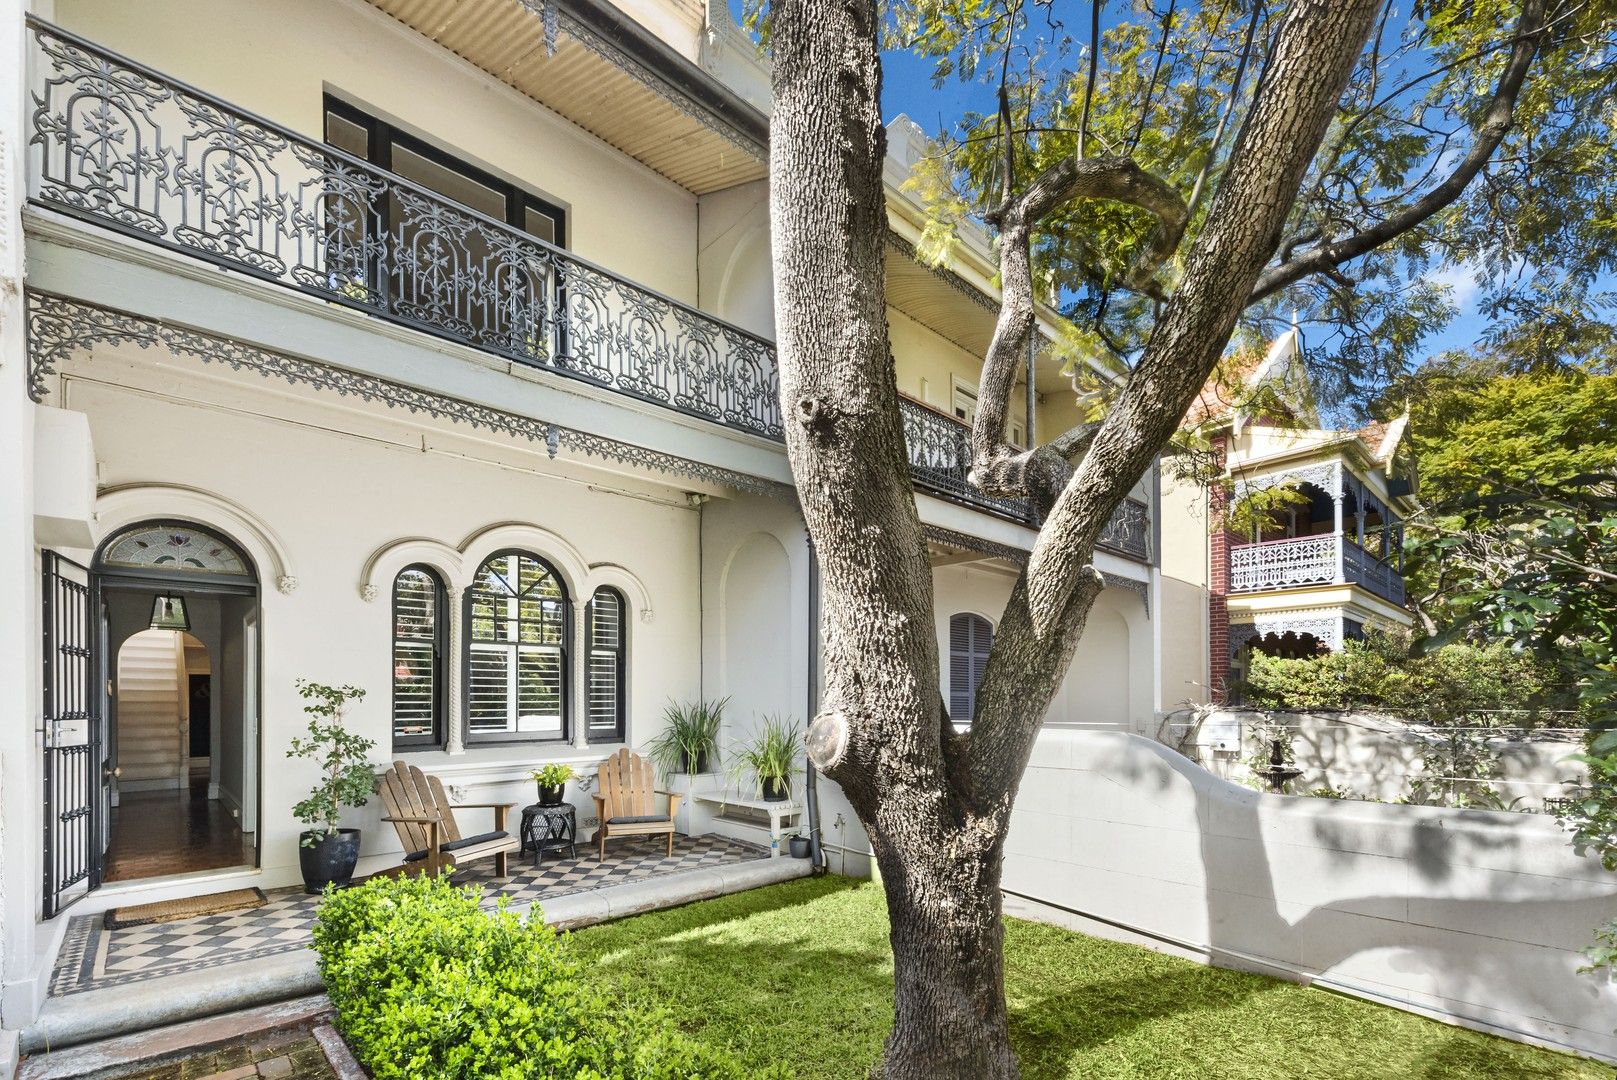 4 bedrooms Terrace in 91 Johnston Street ANNANDALE NSW, 2038